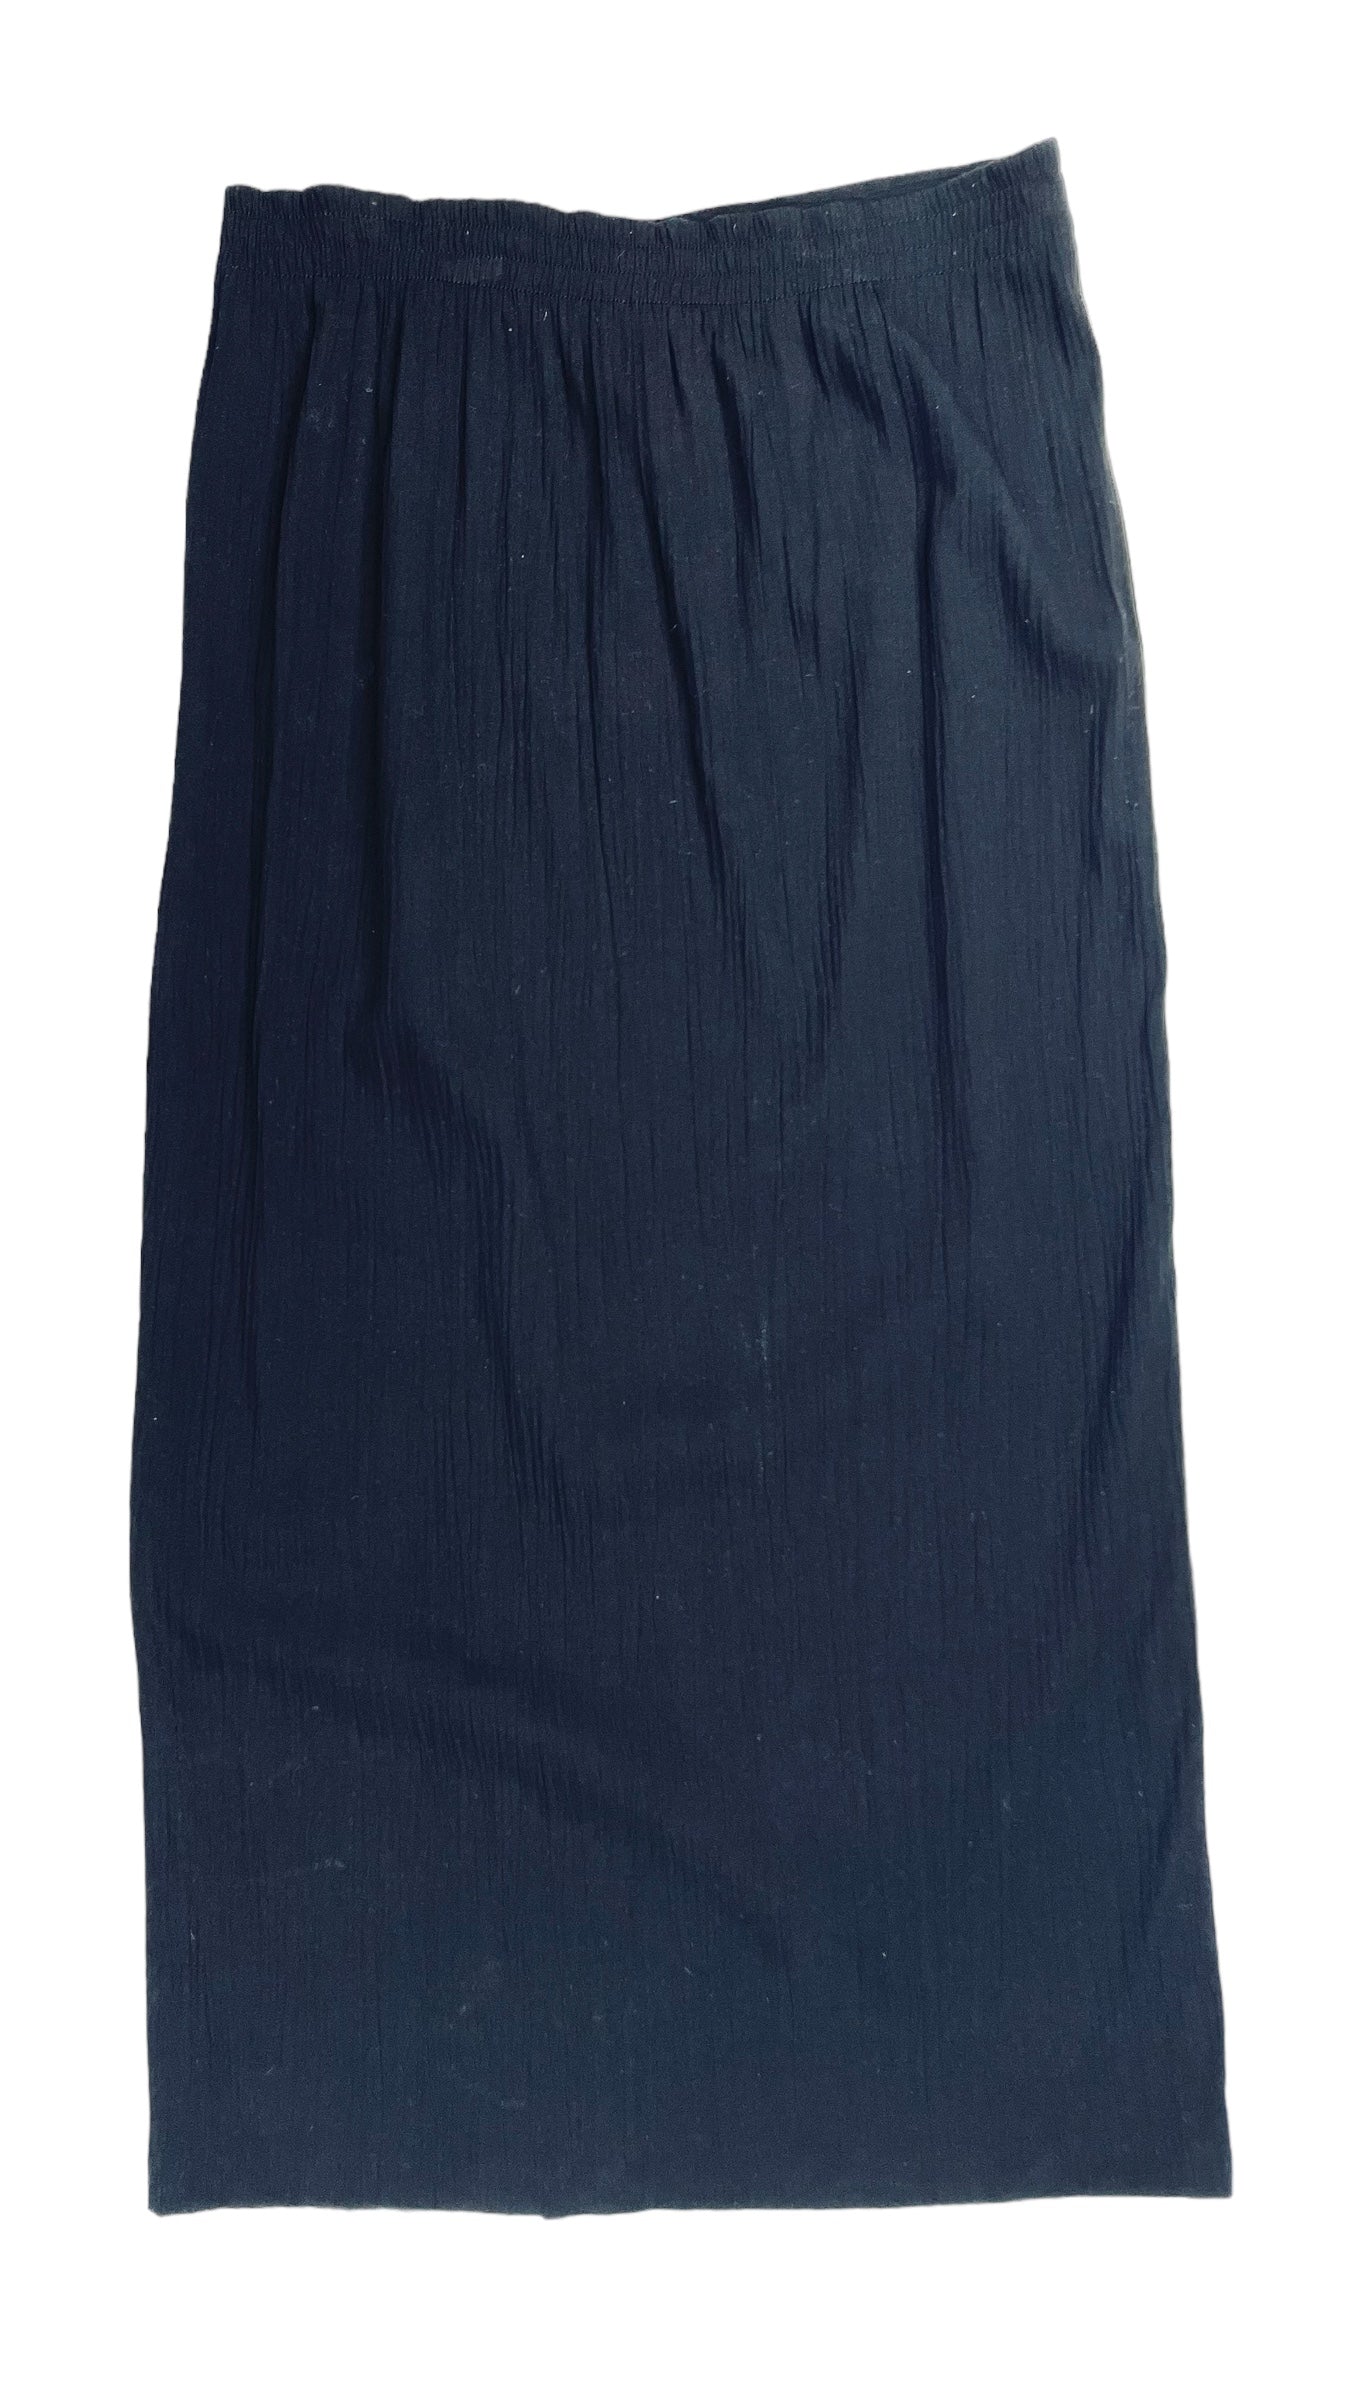 Vintage 90s black textured maxi wrap skirt - Size L